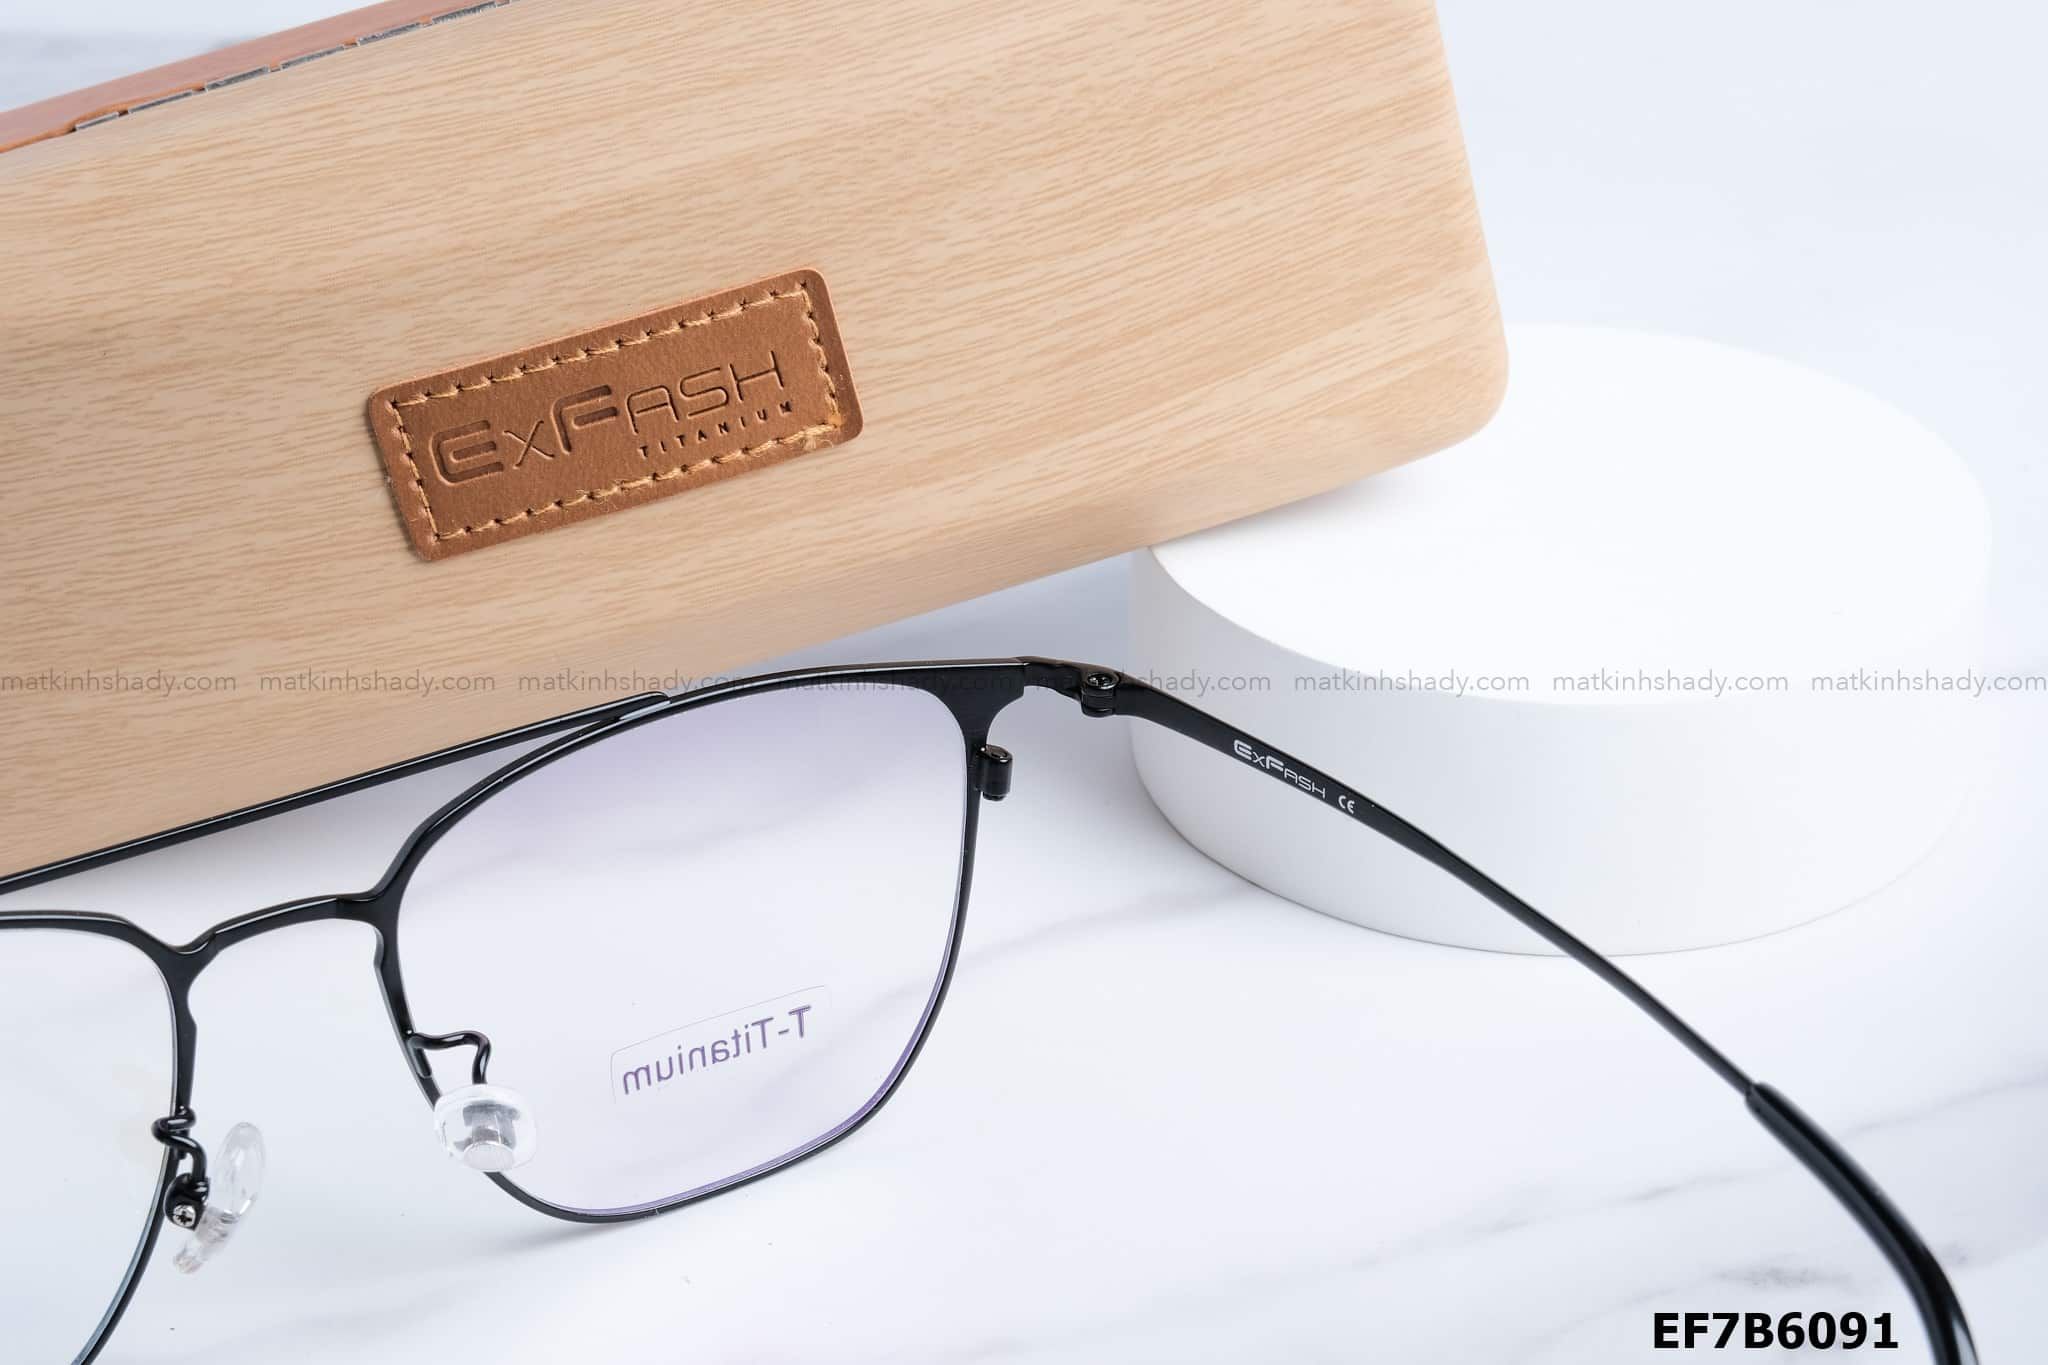  Exfash Eyewear - Glasses - EF7B6091 